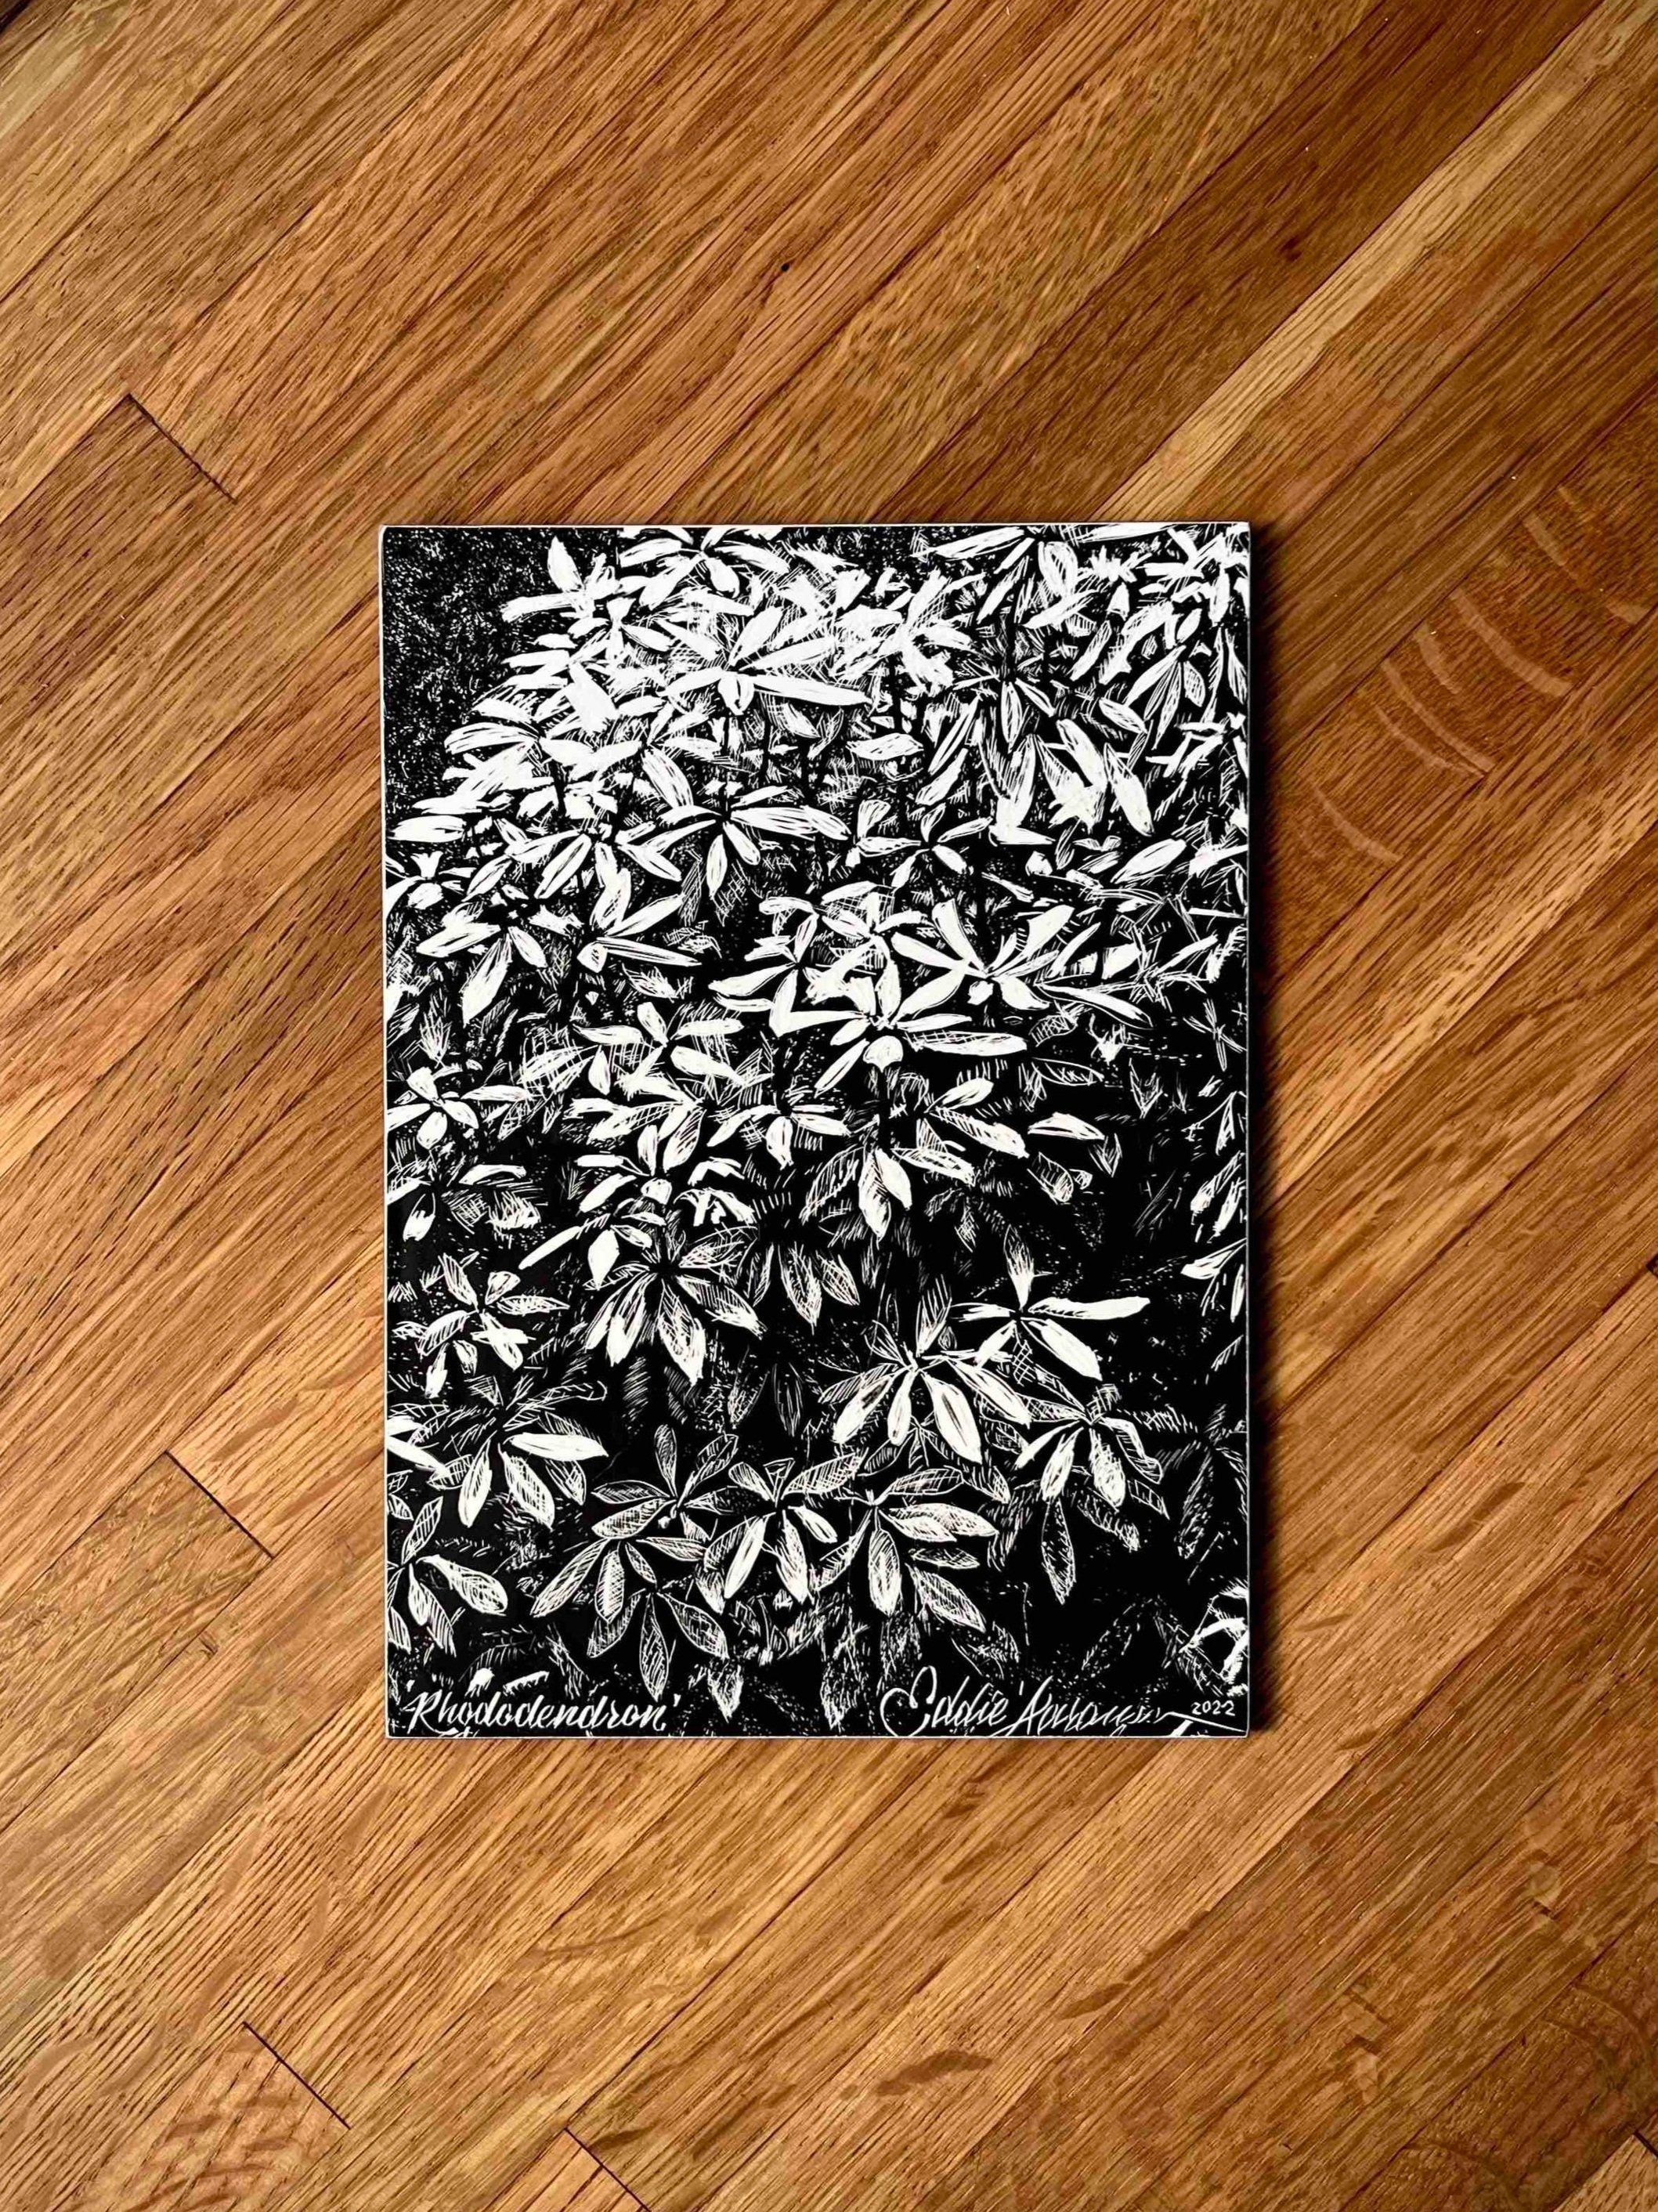 Rhododendron+North+Carolina+Forest+Black+%26+White+Original+Artwork+Scratchboard+Etching.jpg